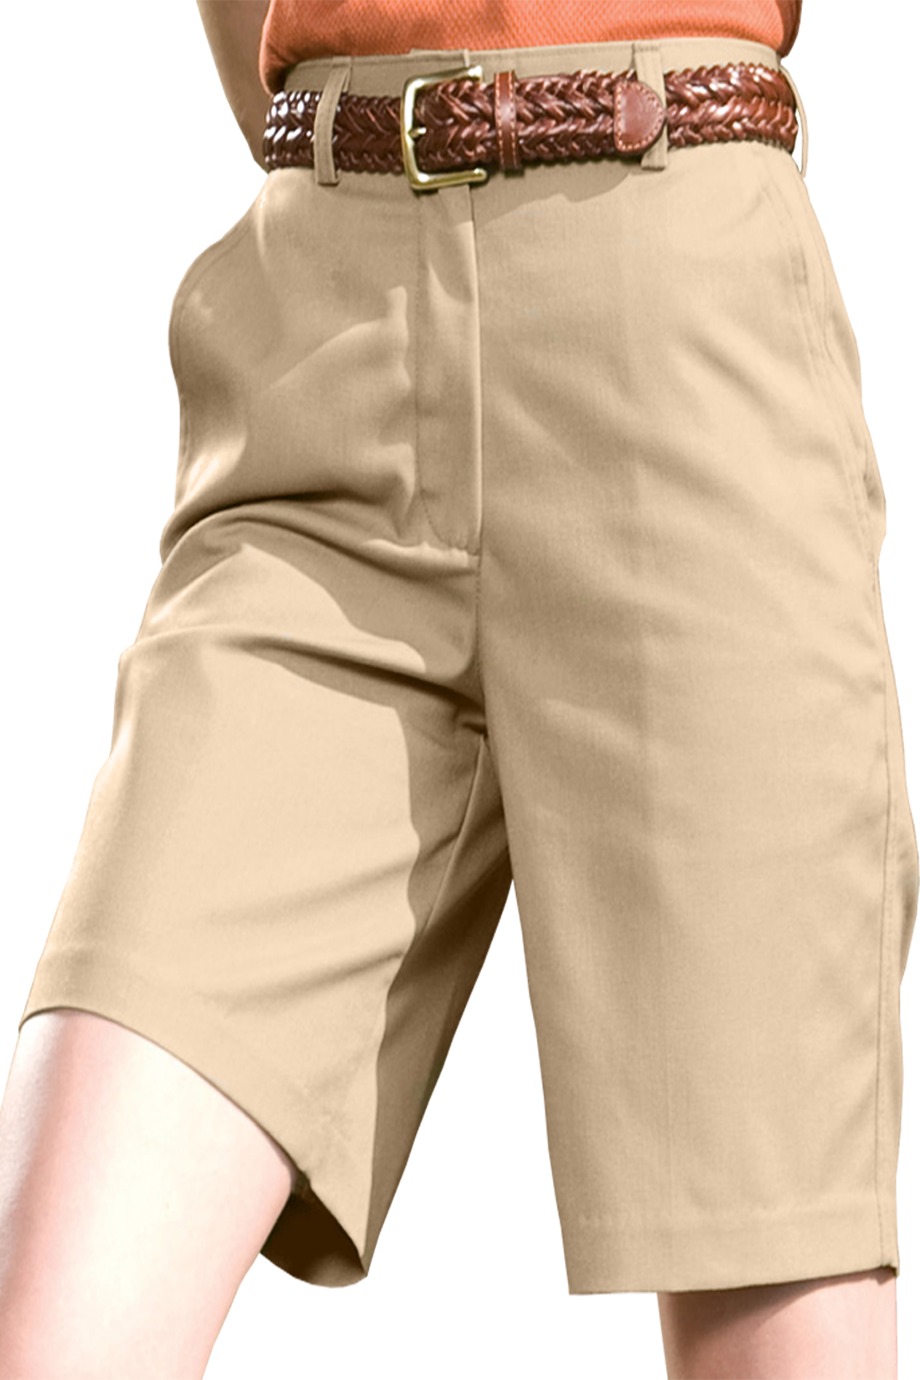 Edwards Garment 8459 - Women's Flat Front Short